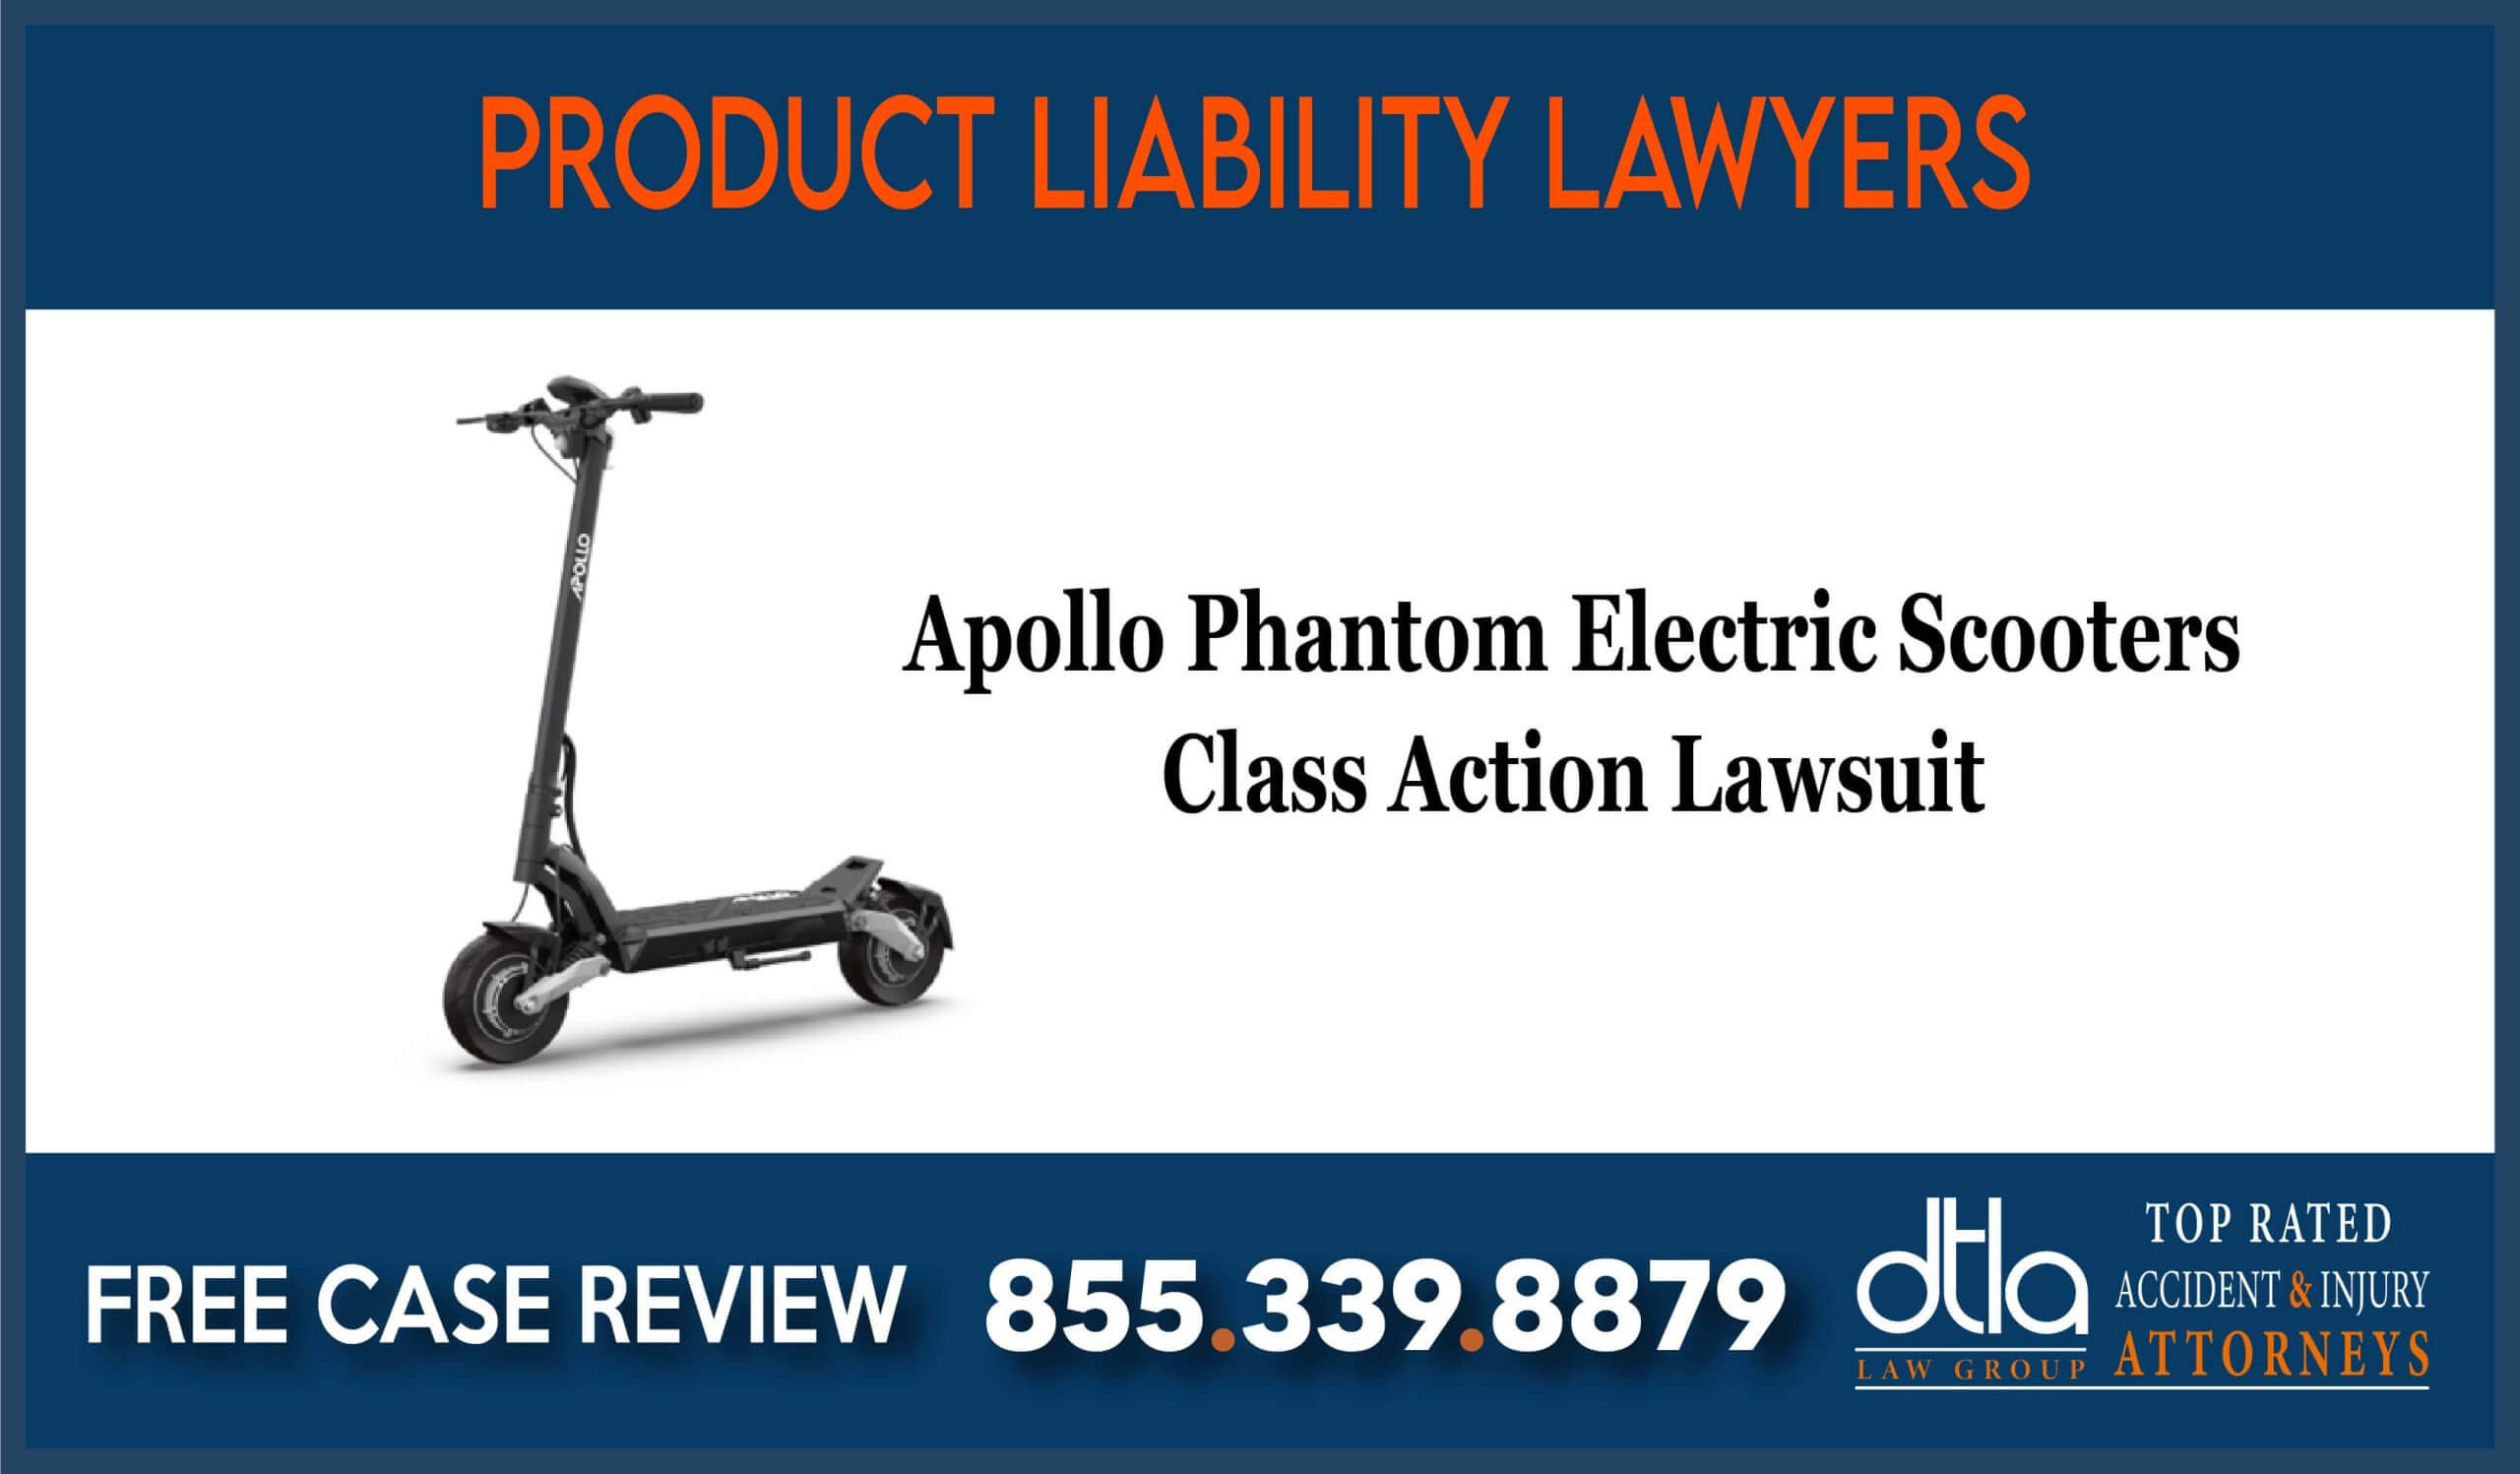 Apollo Phantom Electric Scooters Class Action Lawsuit Lawsuit compensation lawyer attorney sue